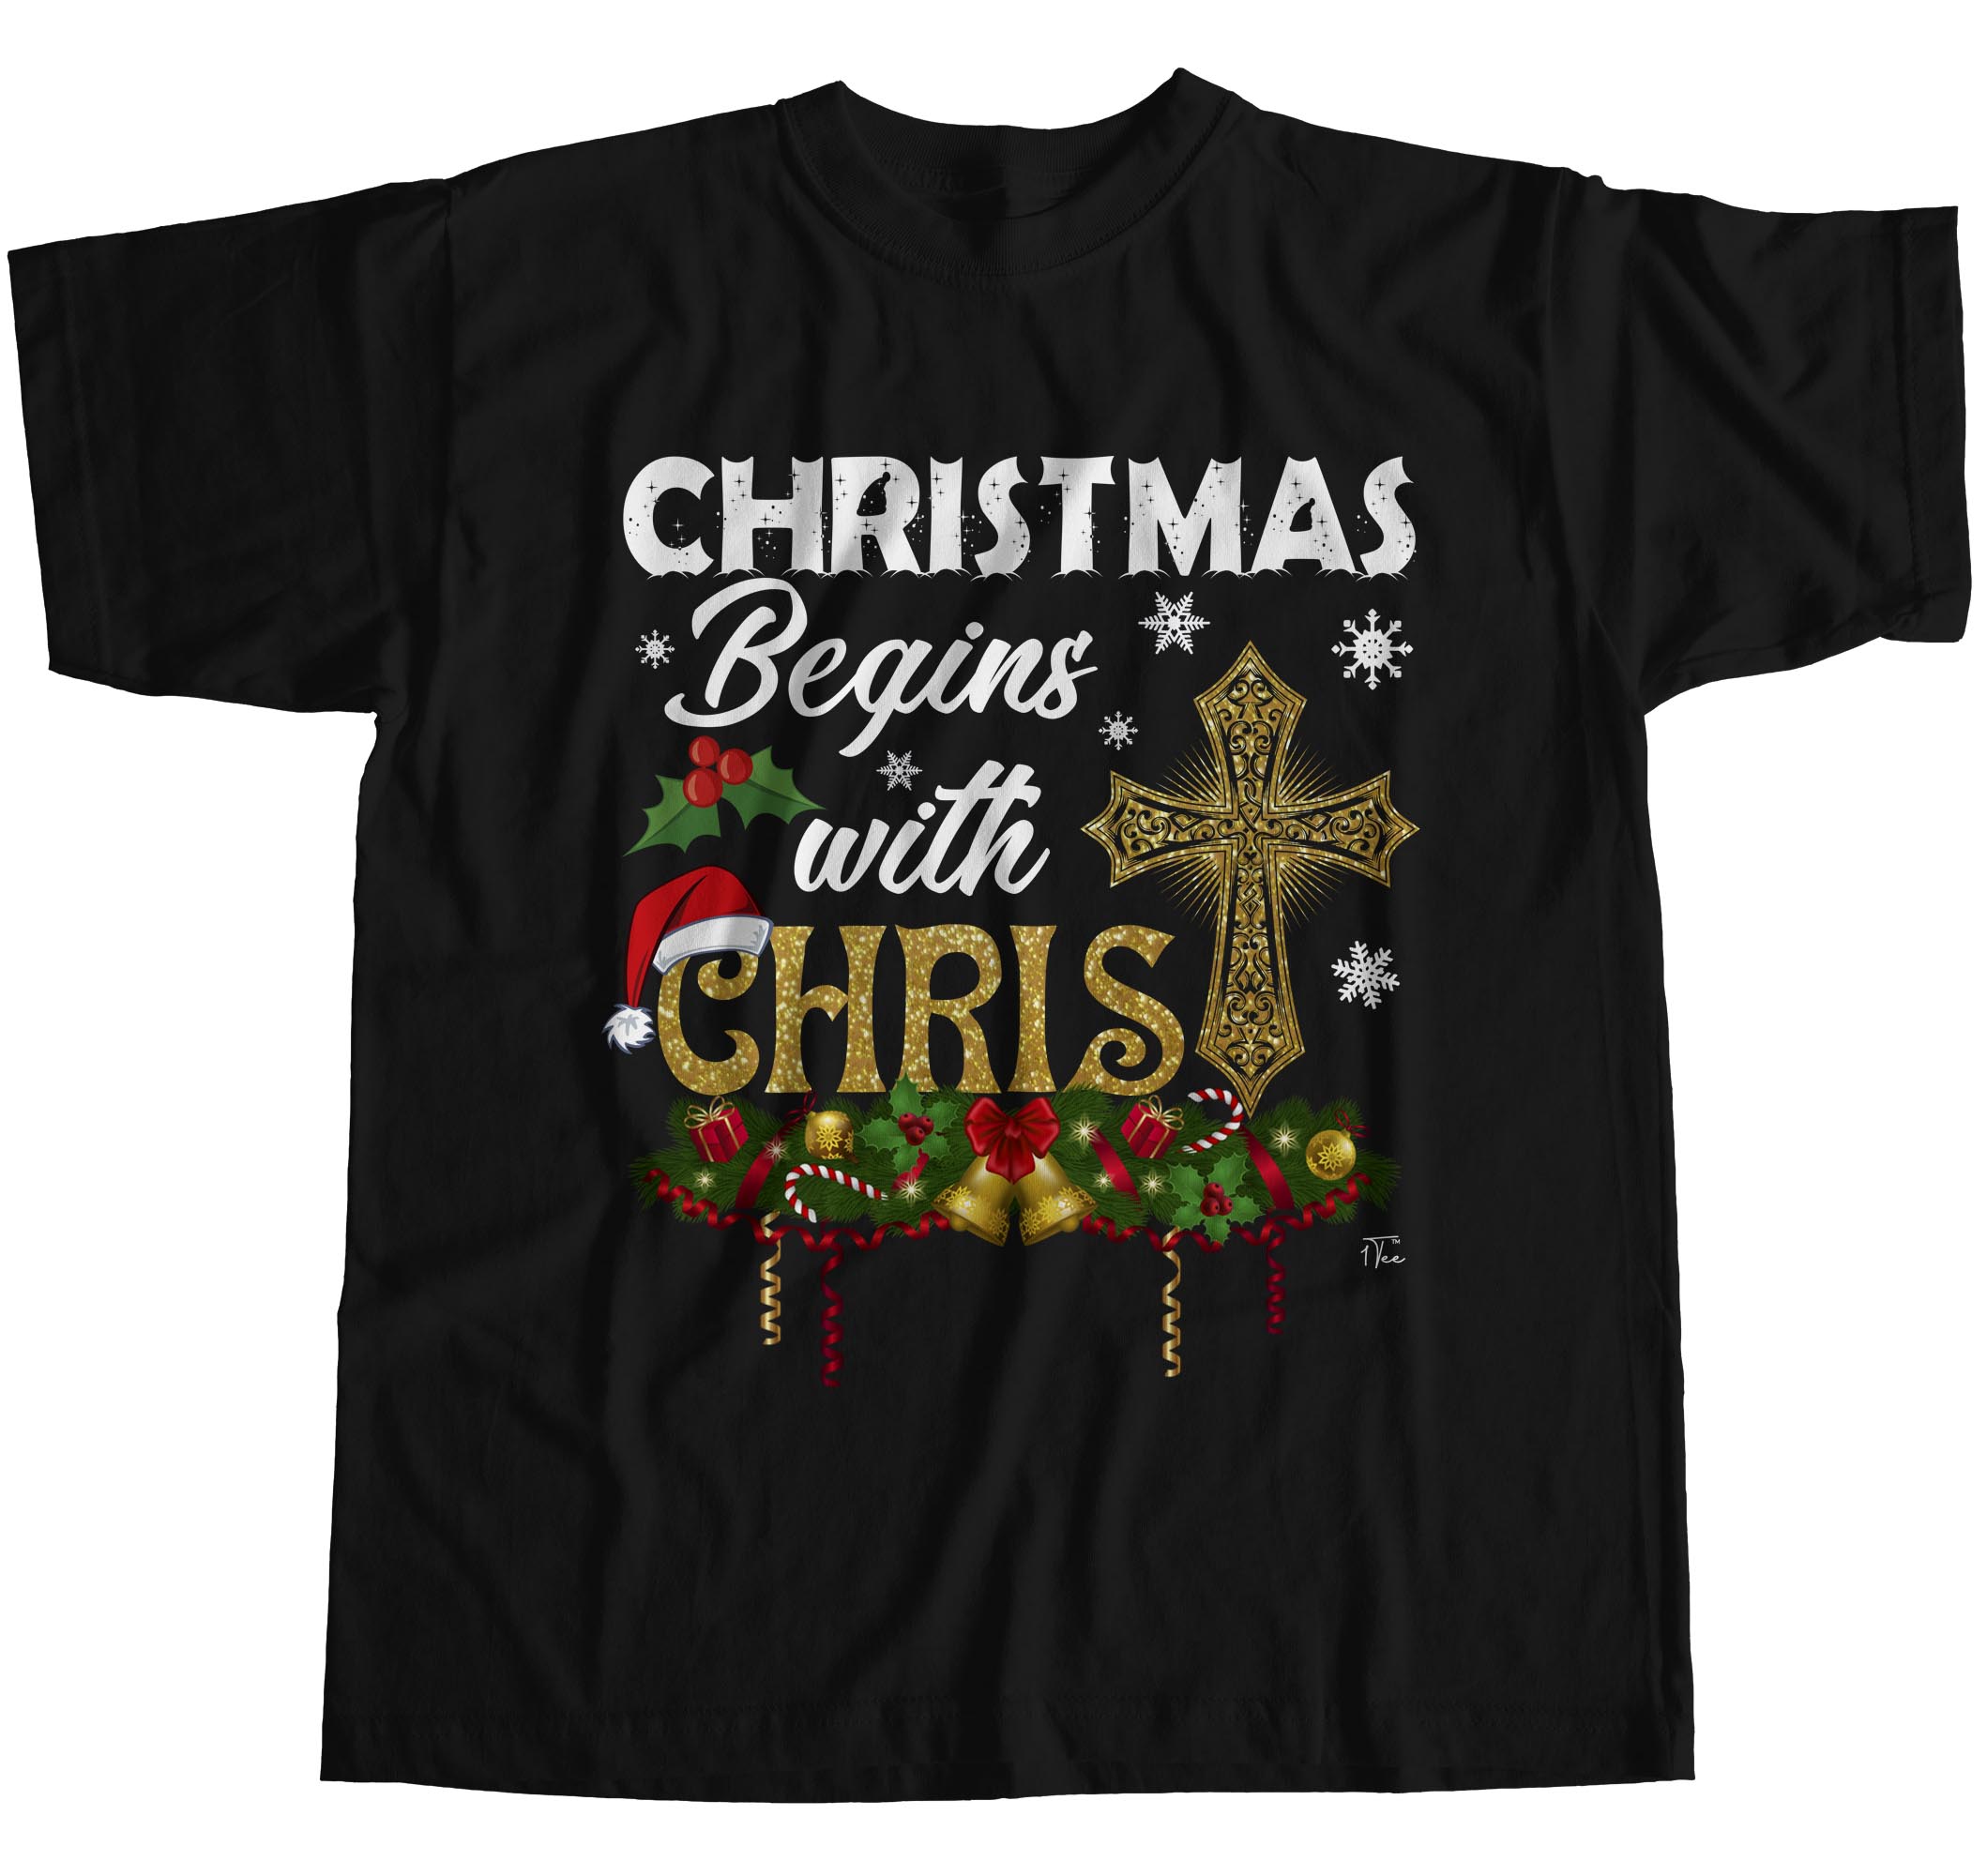 1Tee Mens Christmas Begins with Christ T-Shirt | eBay